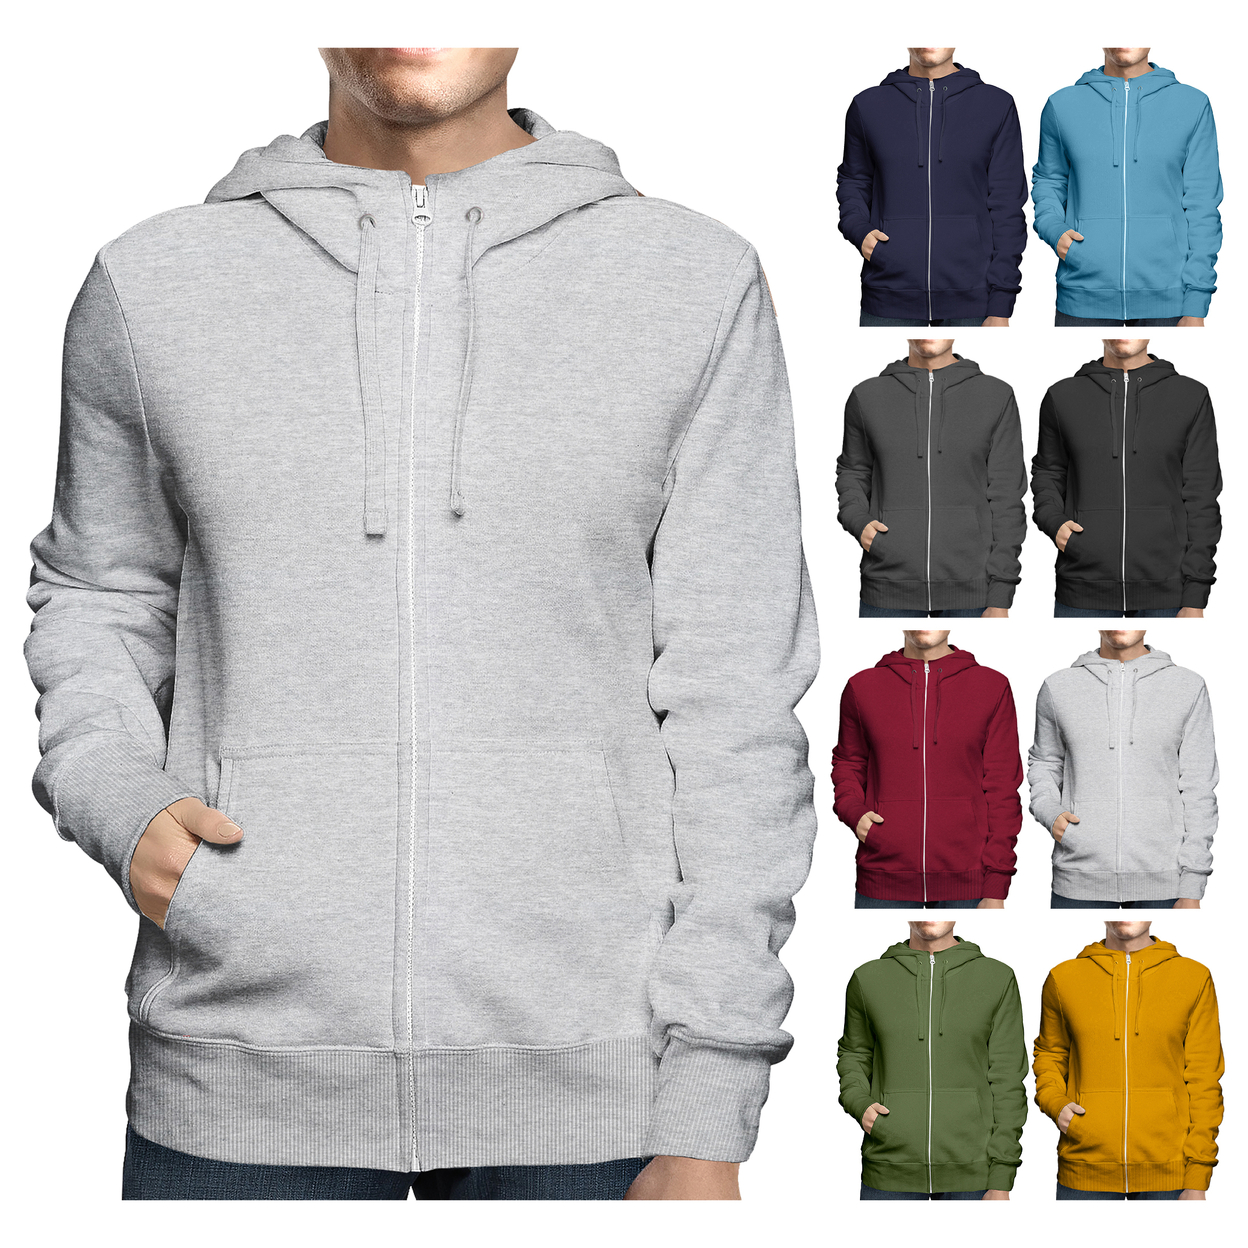 2-Pack: Men's Winter Warm Soft Full Zip-Up Fleece Lined Hoodie Sweatshirt - Black & Black, Small